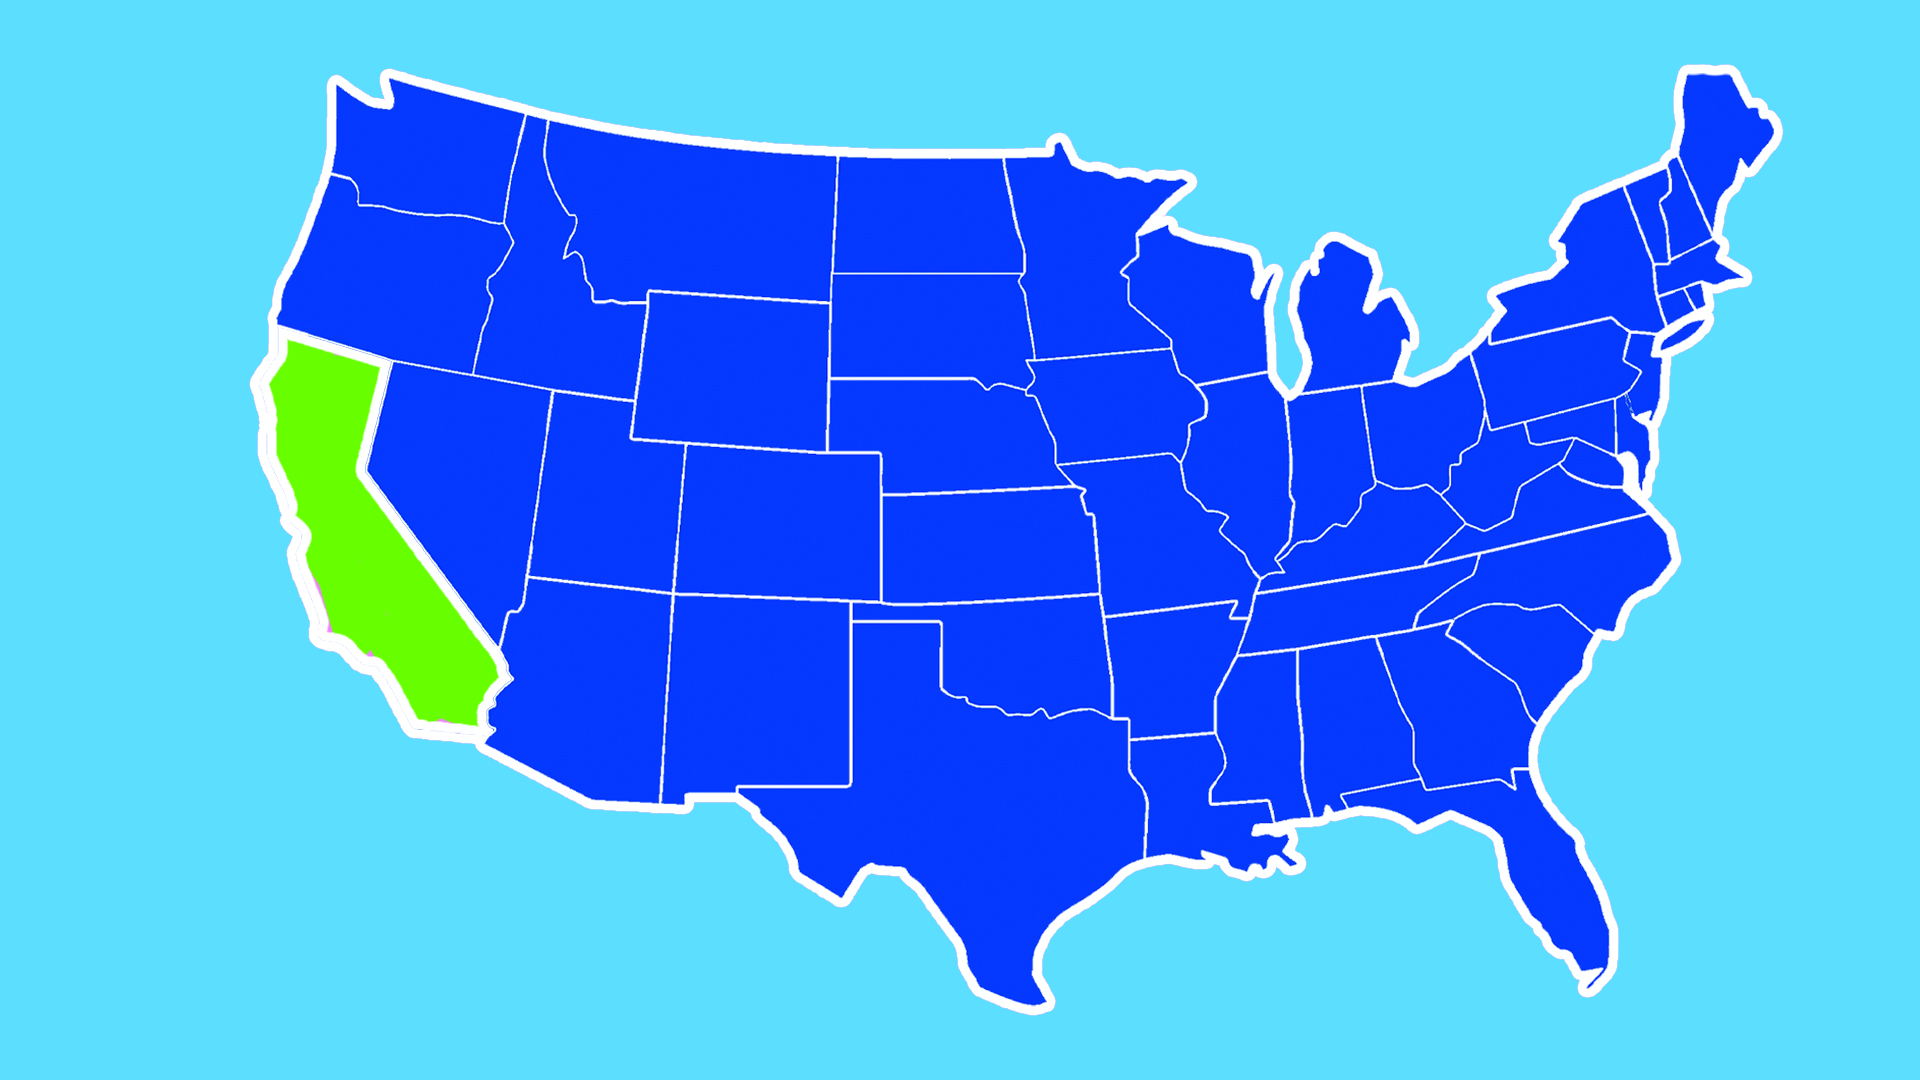 California highlighted on a USA map